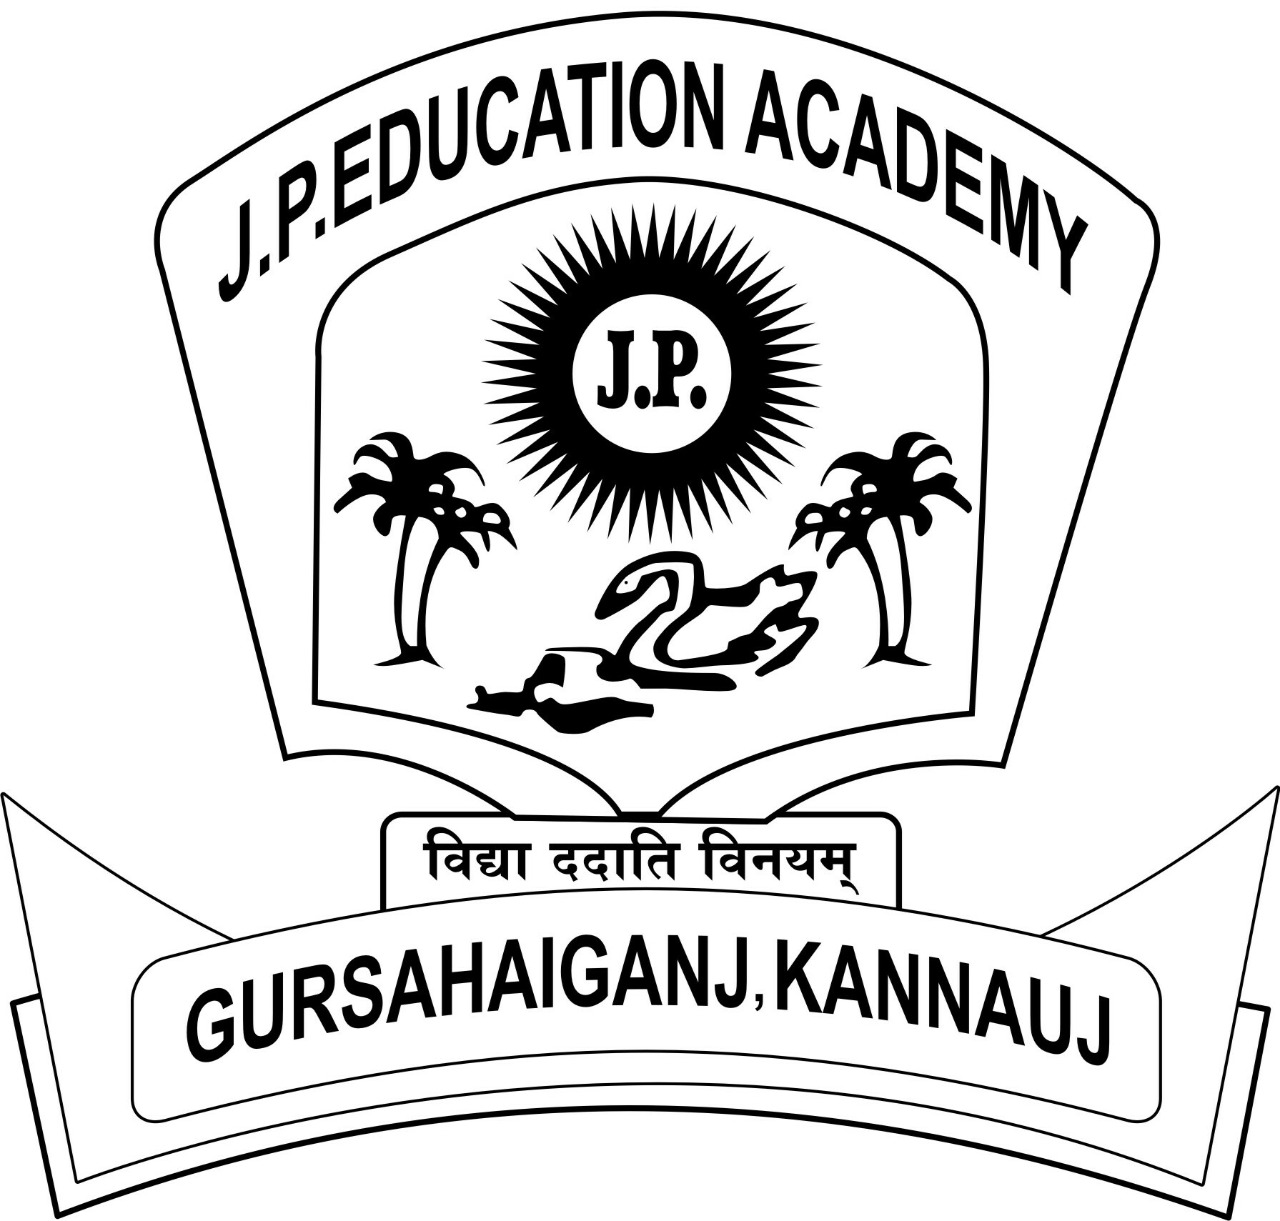 J.P. Education Academy